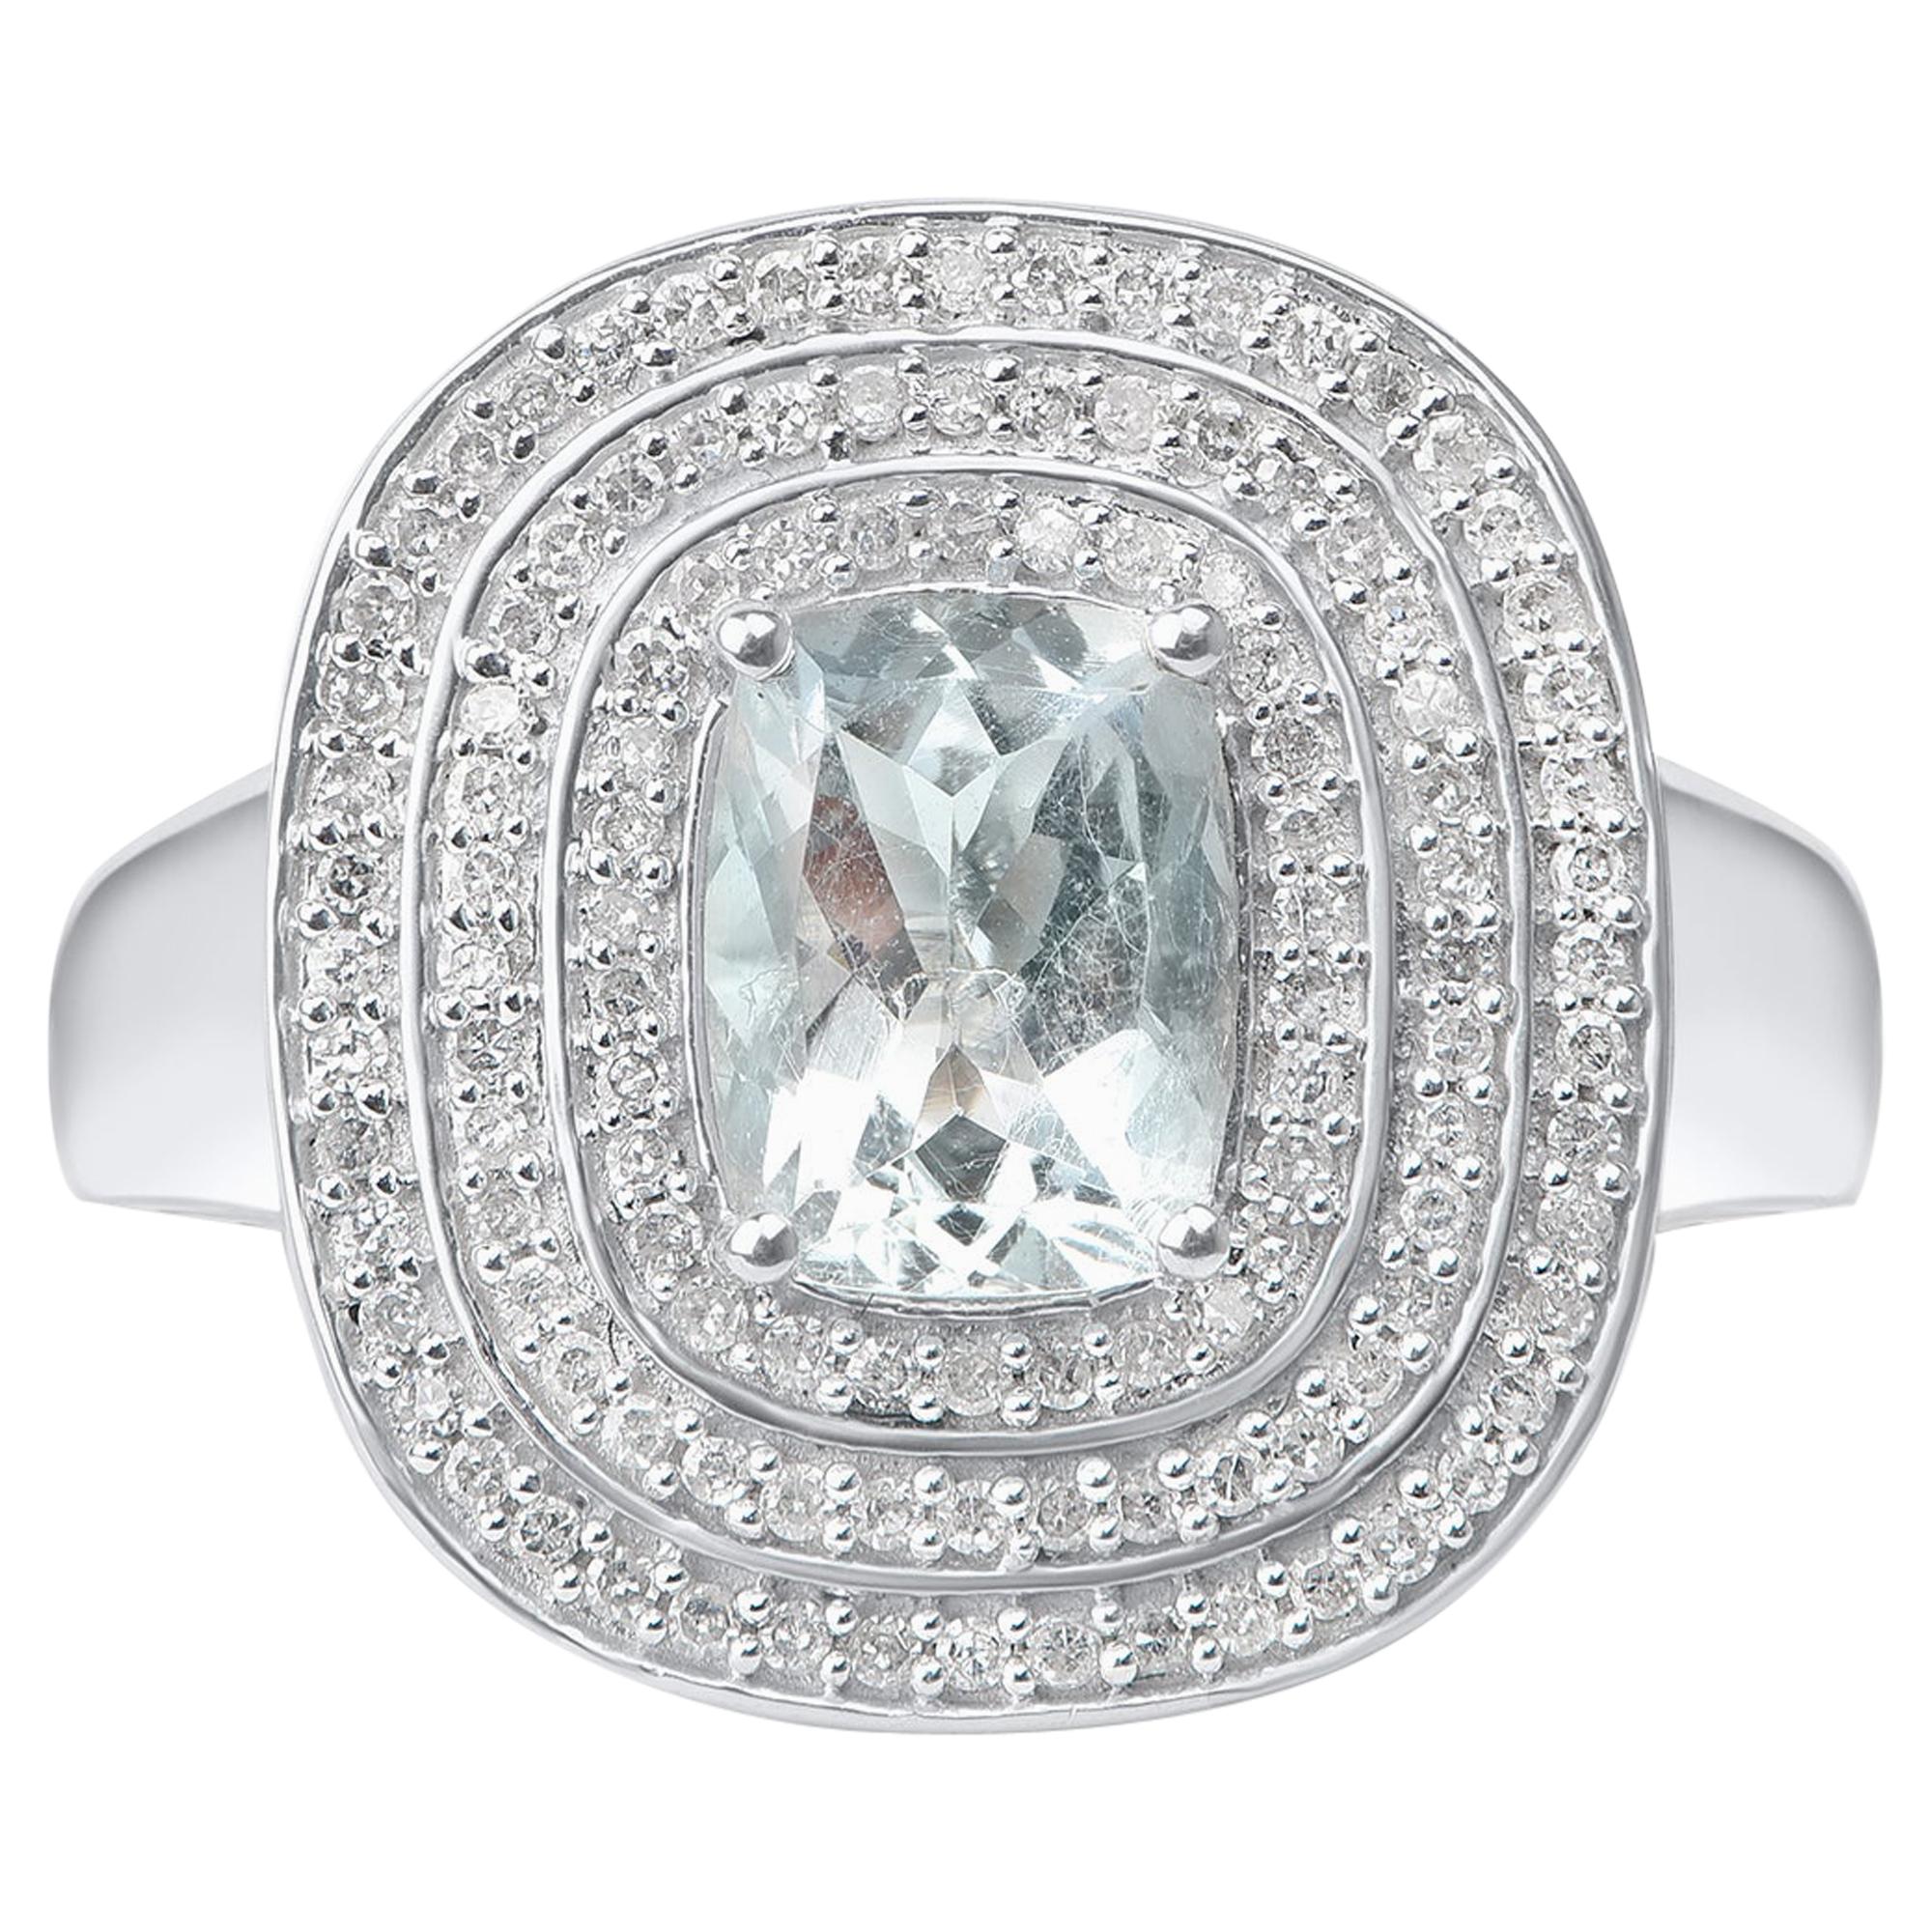 TJD 0.35 Carat Diamond and 8 X 6 MM Cushion Cut Aquamarine 14K White Gold Ring